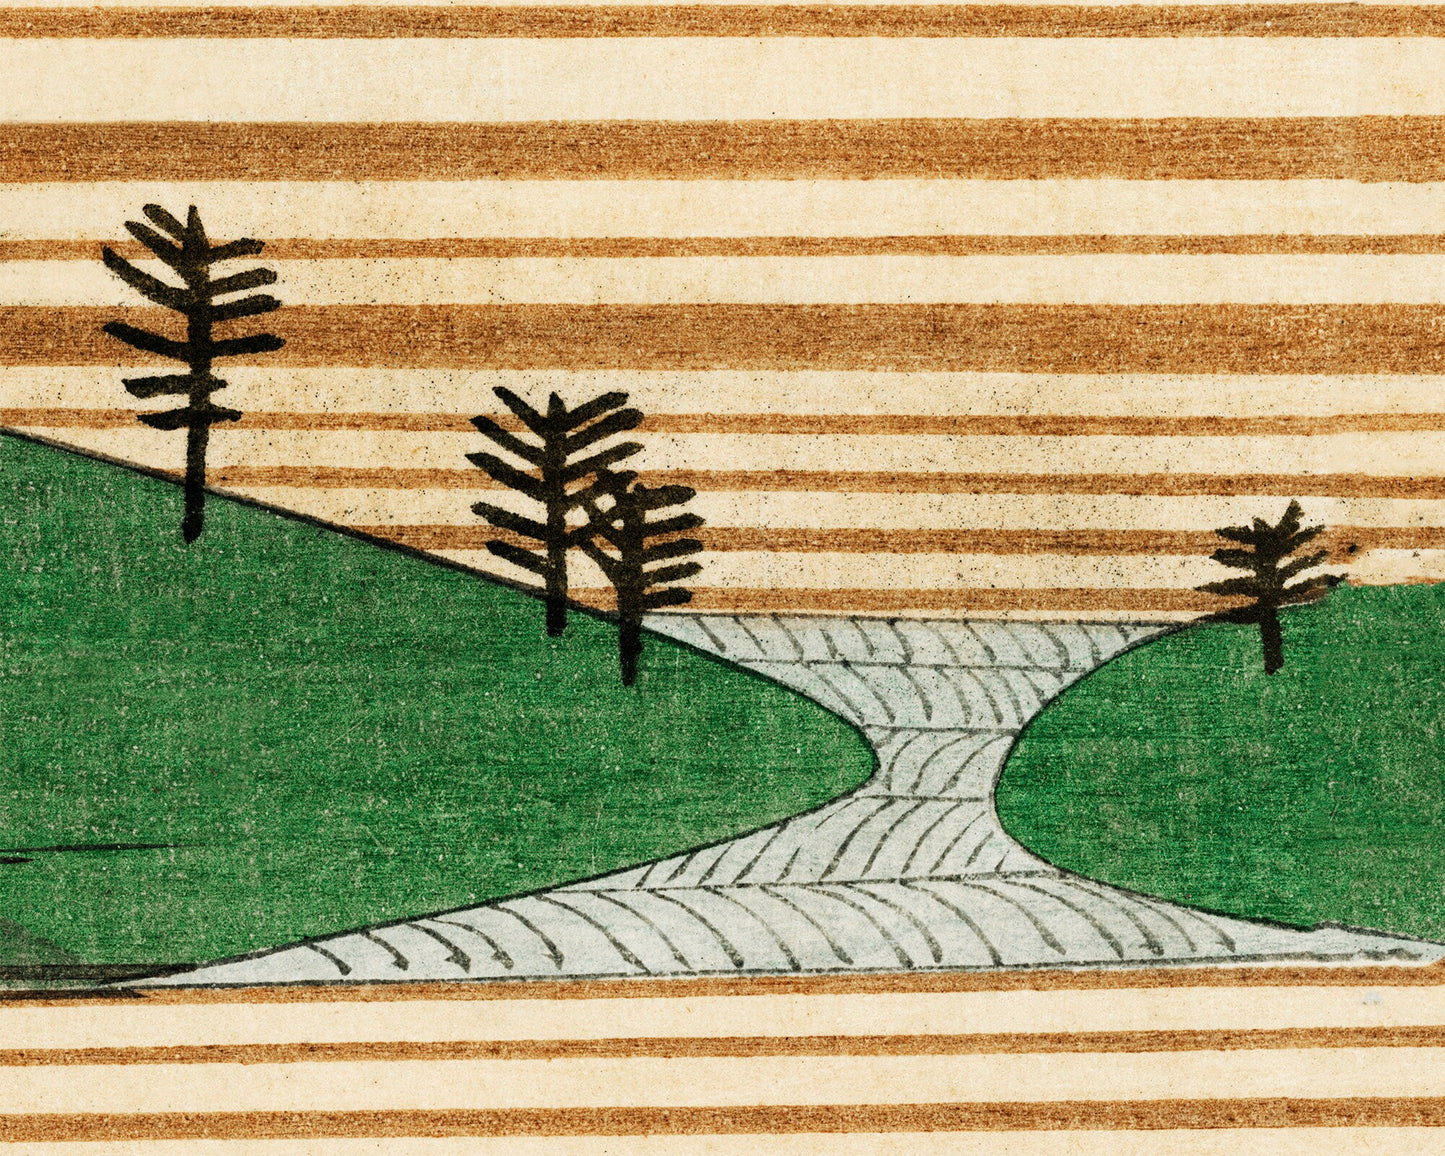 Trees on landscape | Vintage Asian pattern print | Watanabe Seitei | Kacho-ga artist | Modern vintage décor | Eco-friendly gift